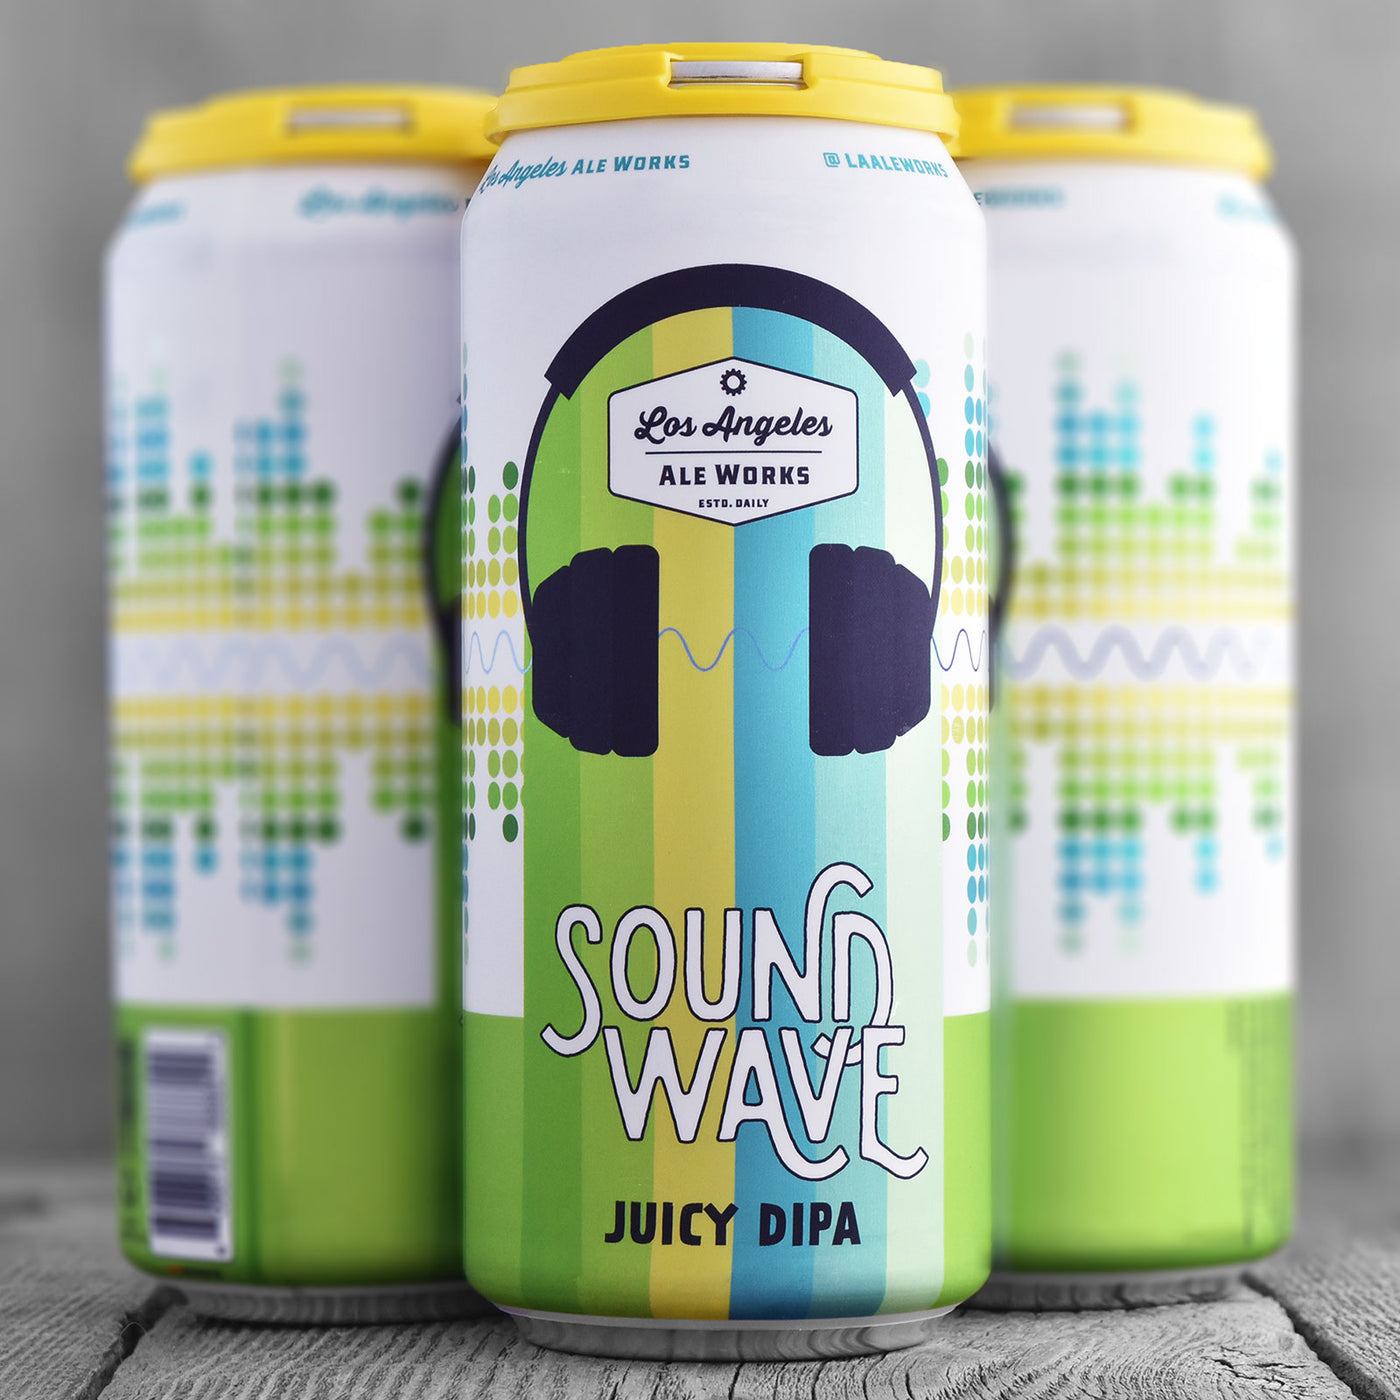 Los Angeles Ale Works Sound Wave